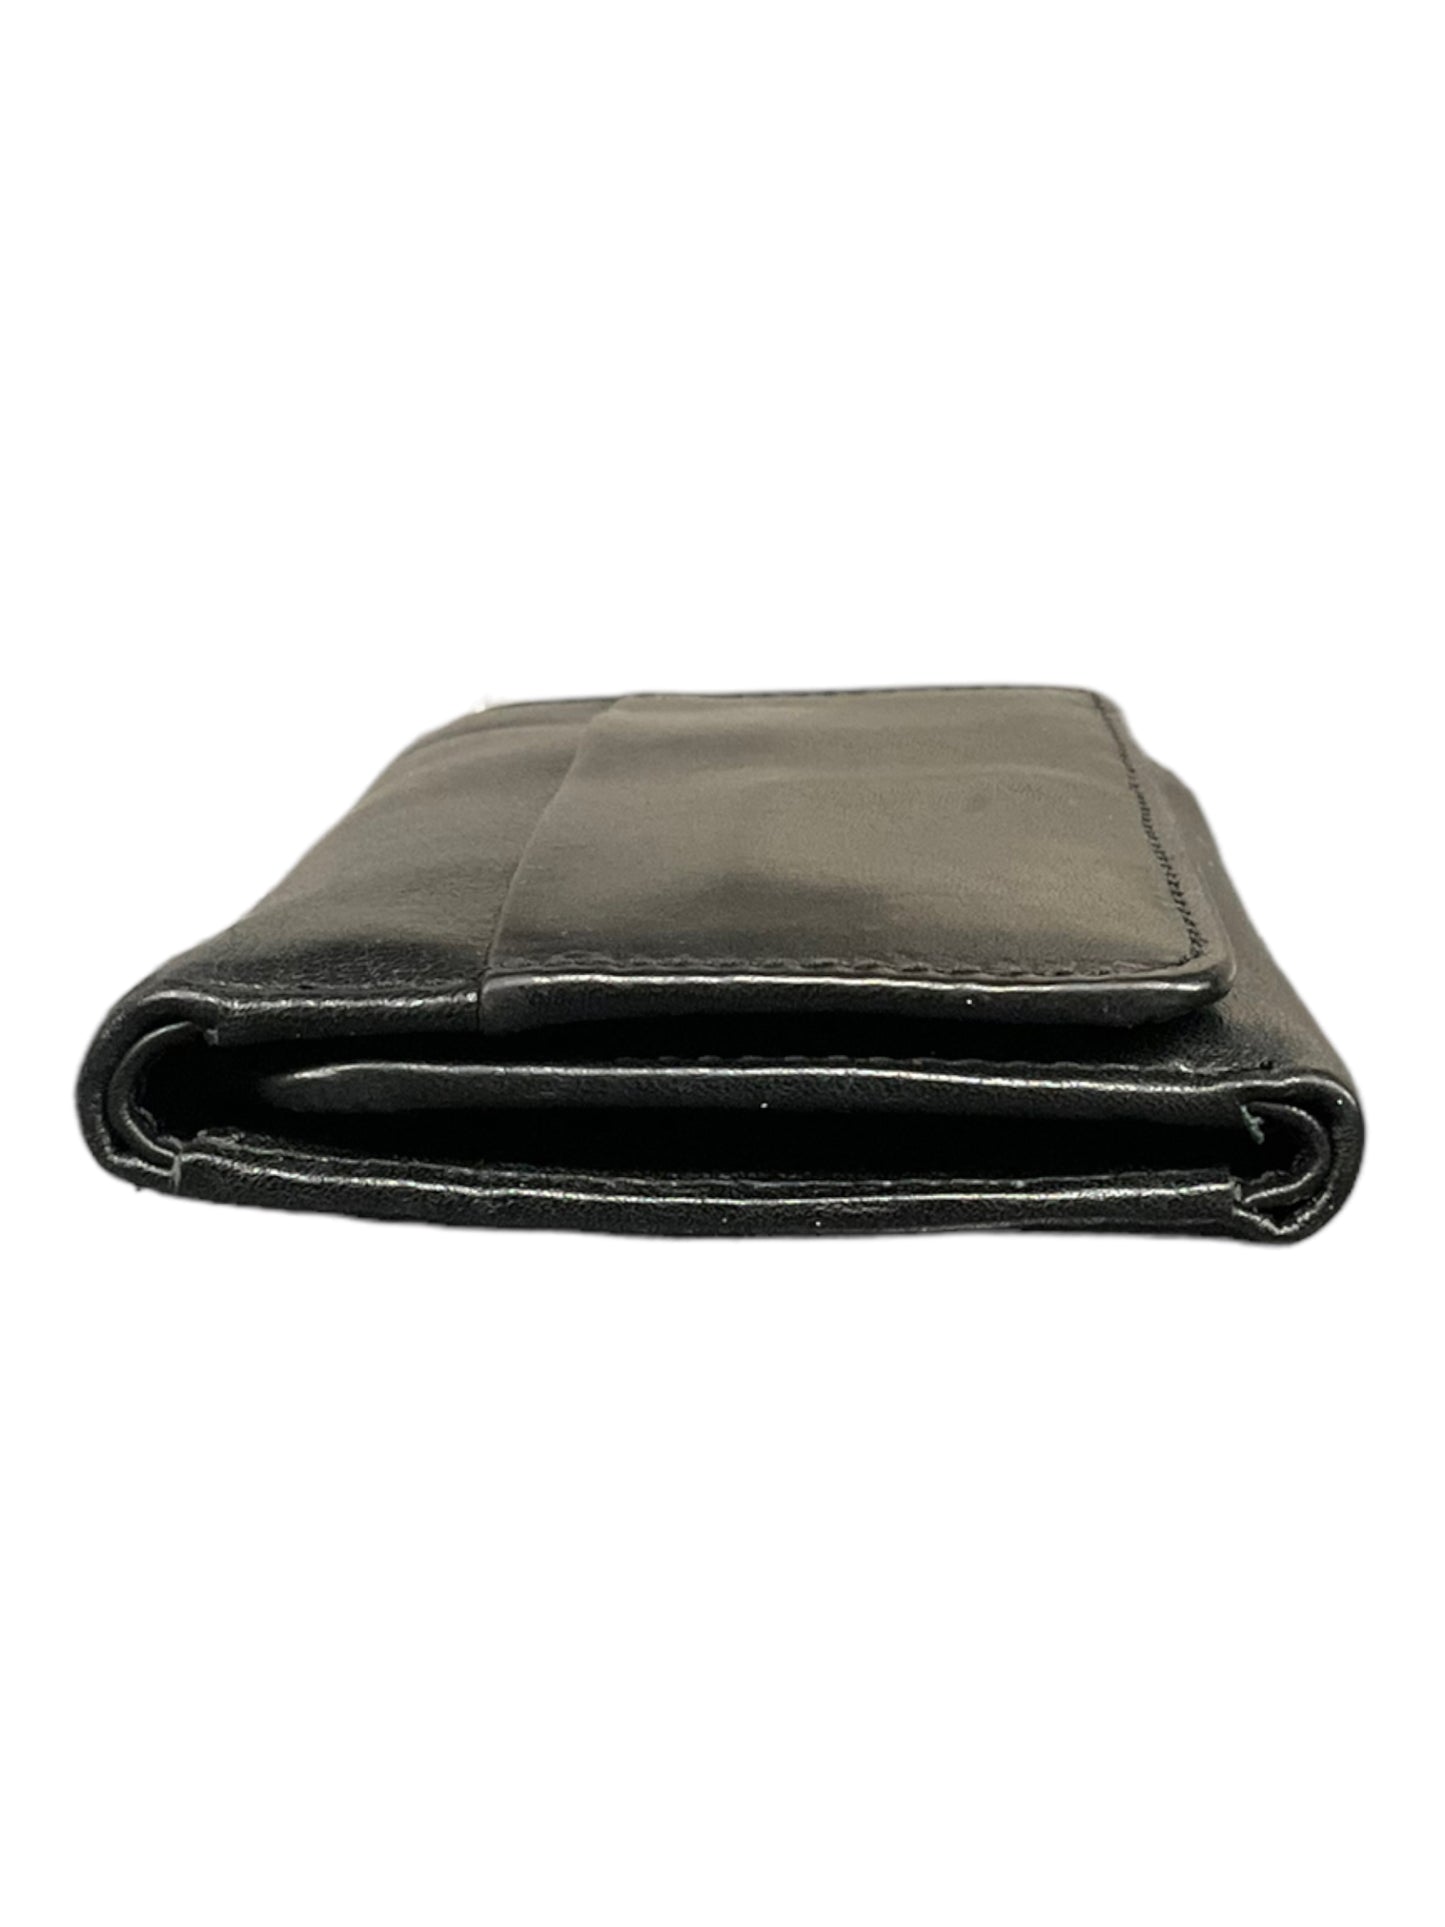 Wallet By Clarks  Size: Medium